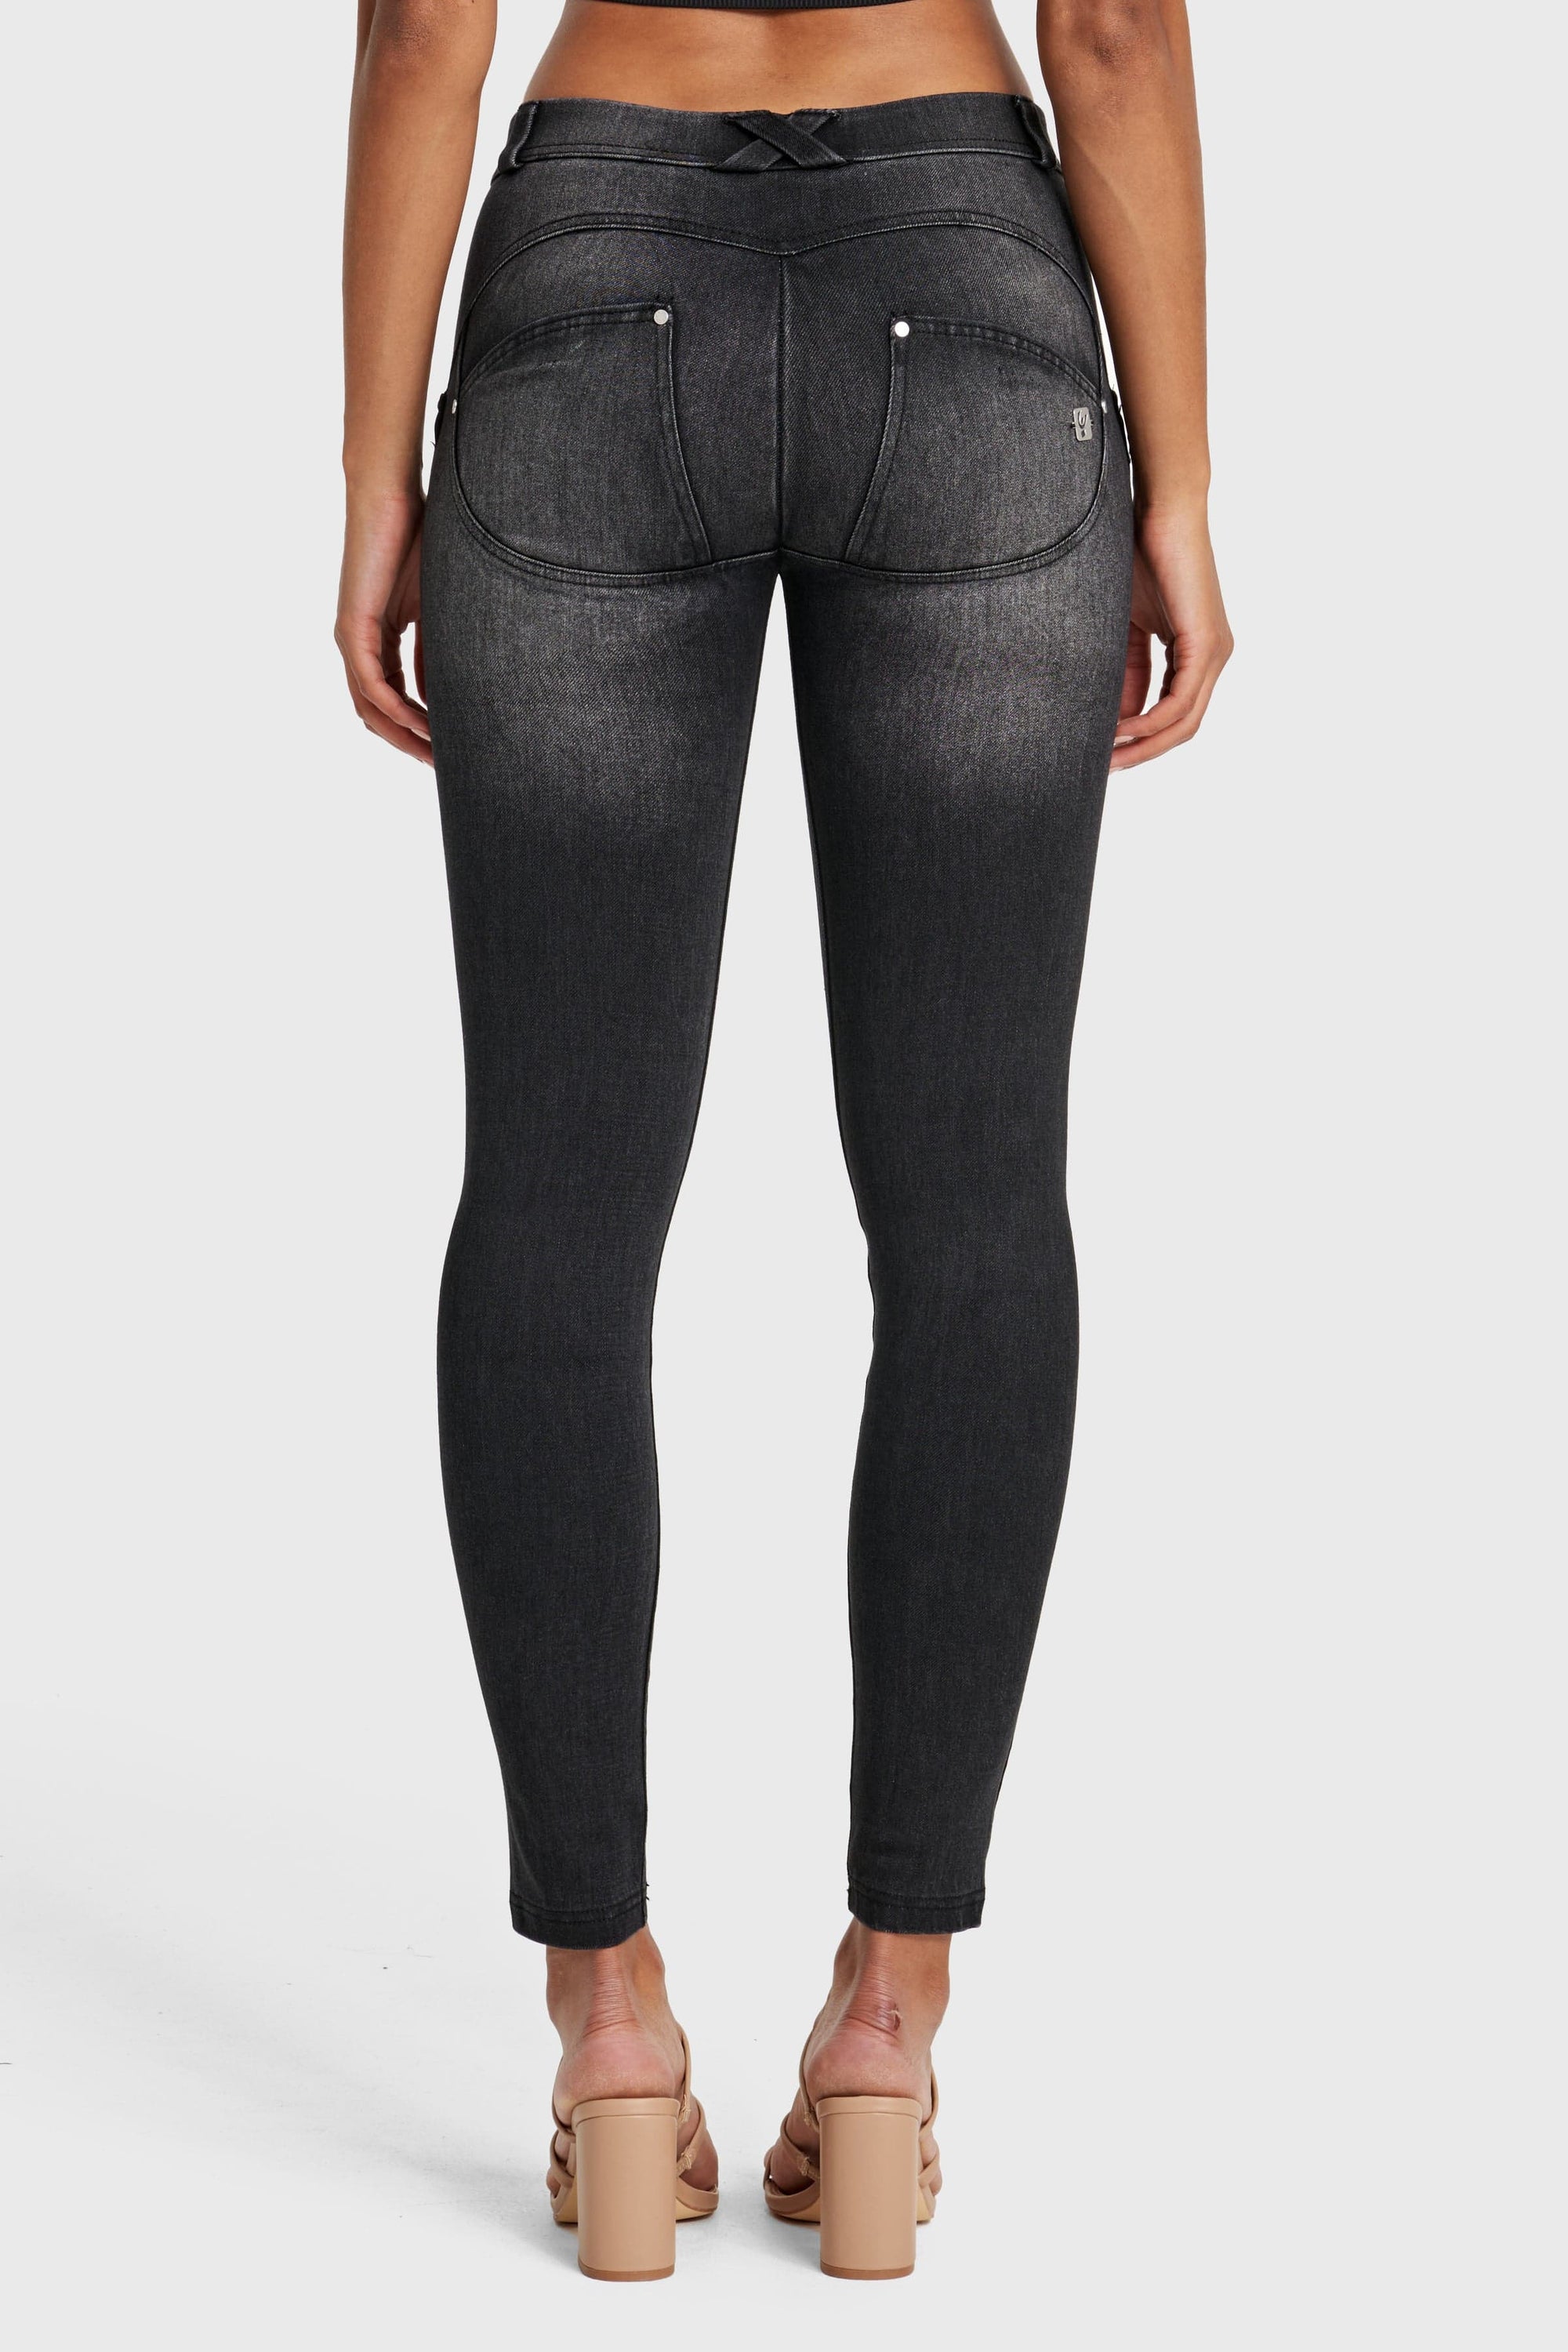 WR.UP® Snug Jeans - Mid Rise - Full Length - Black + Black Stitching 8